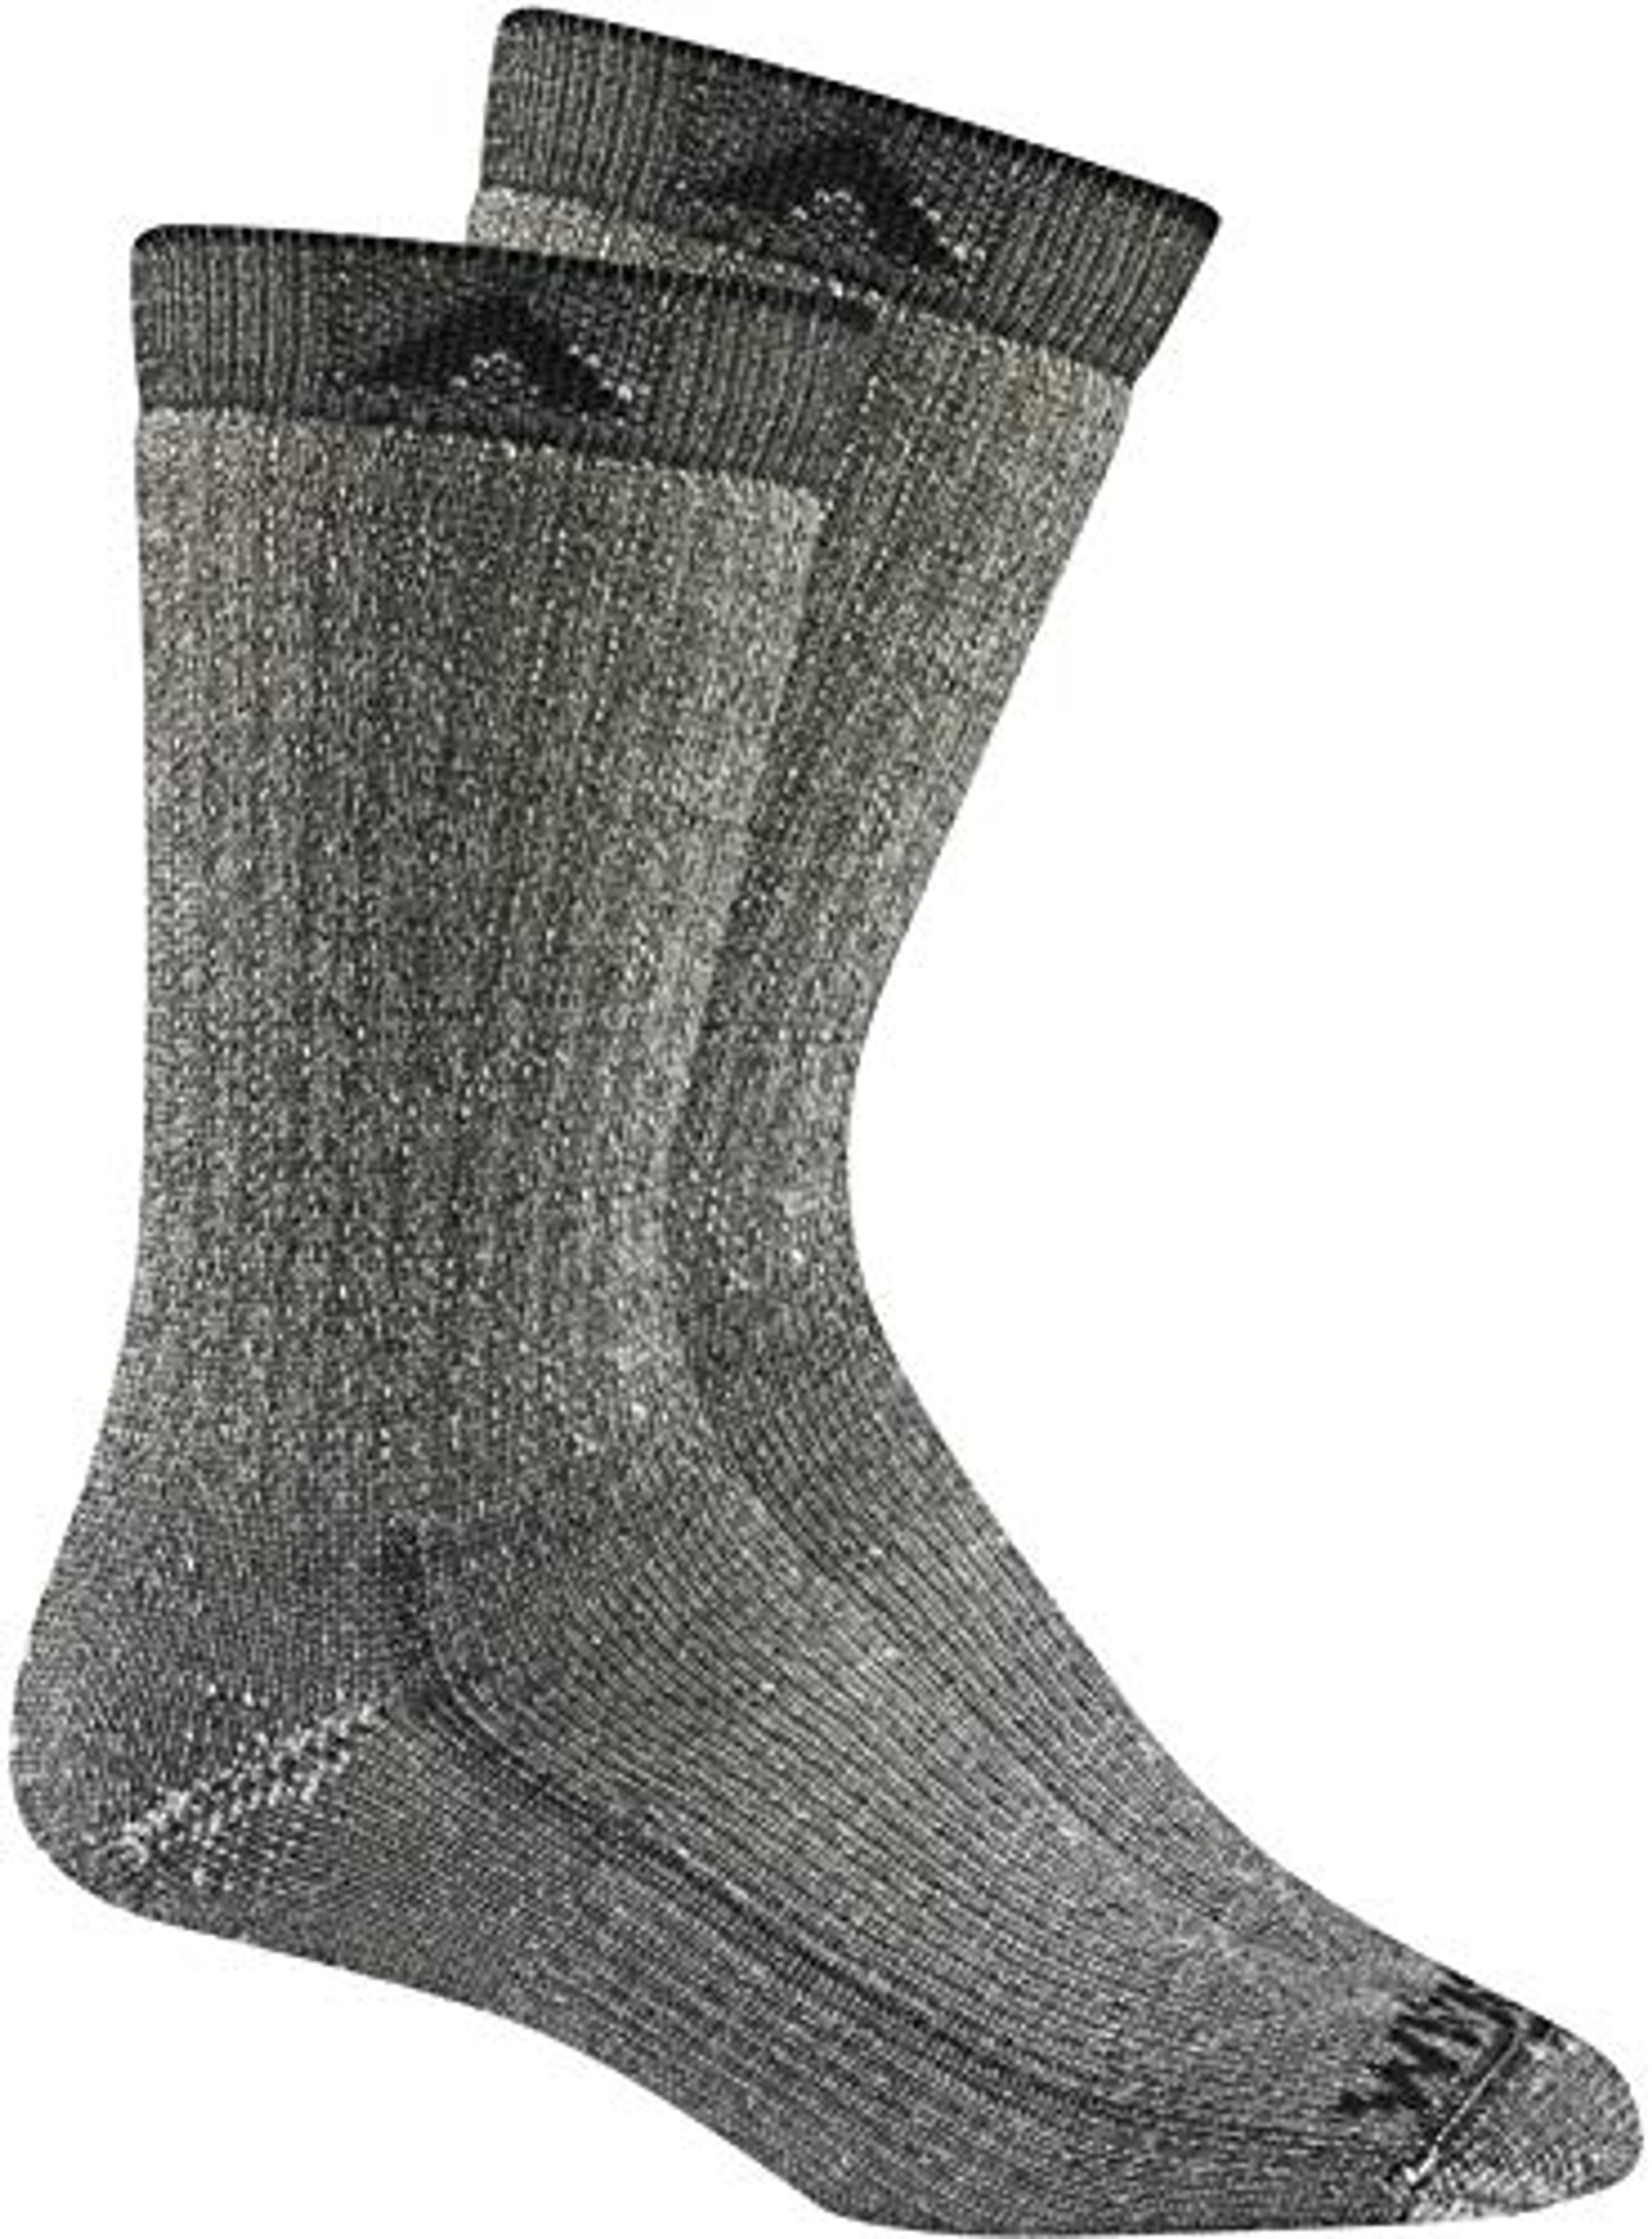 Wigwam Comfort Hiker Socks 2 Pack - Webb's Sporting Goods